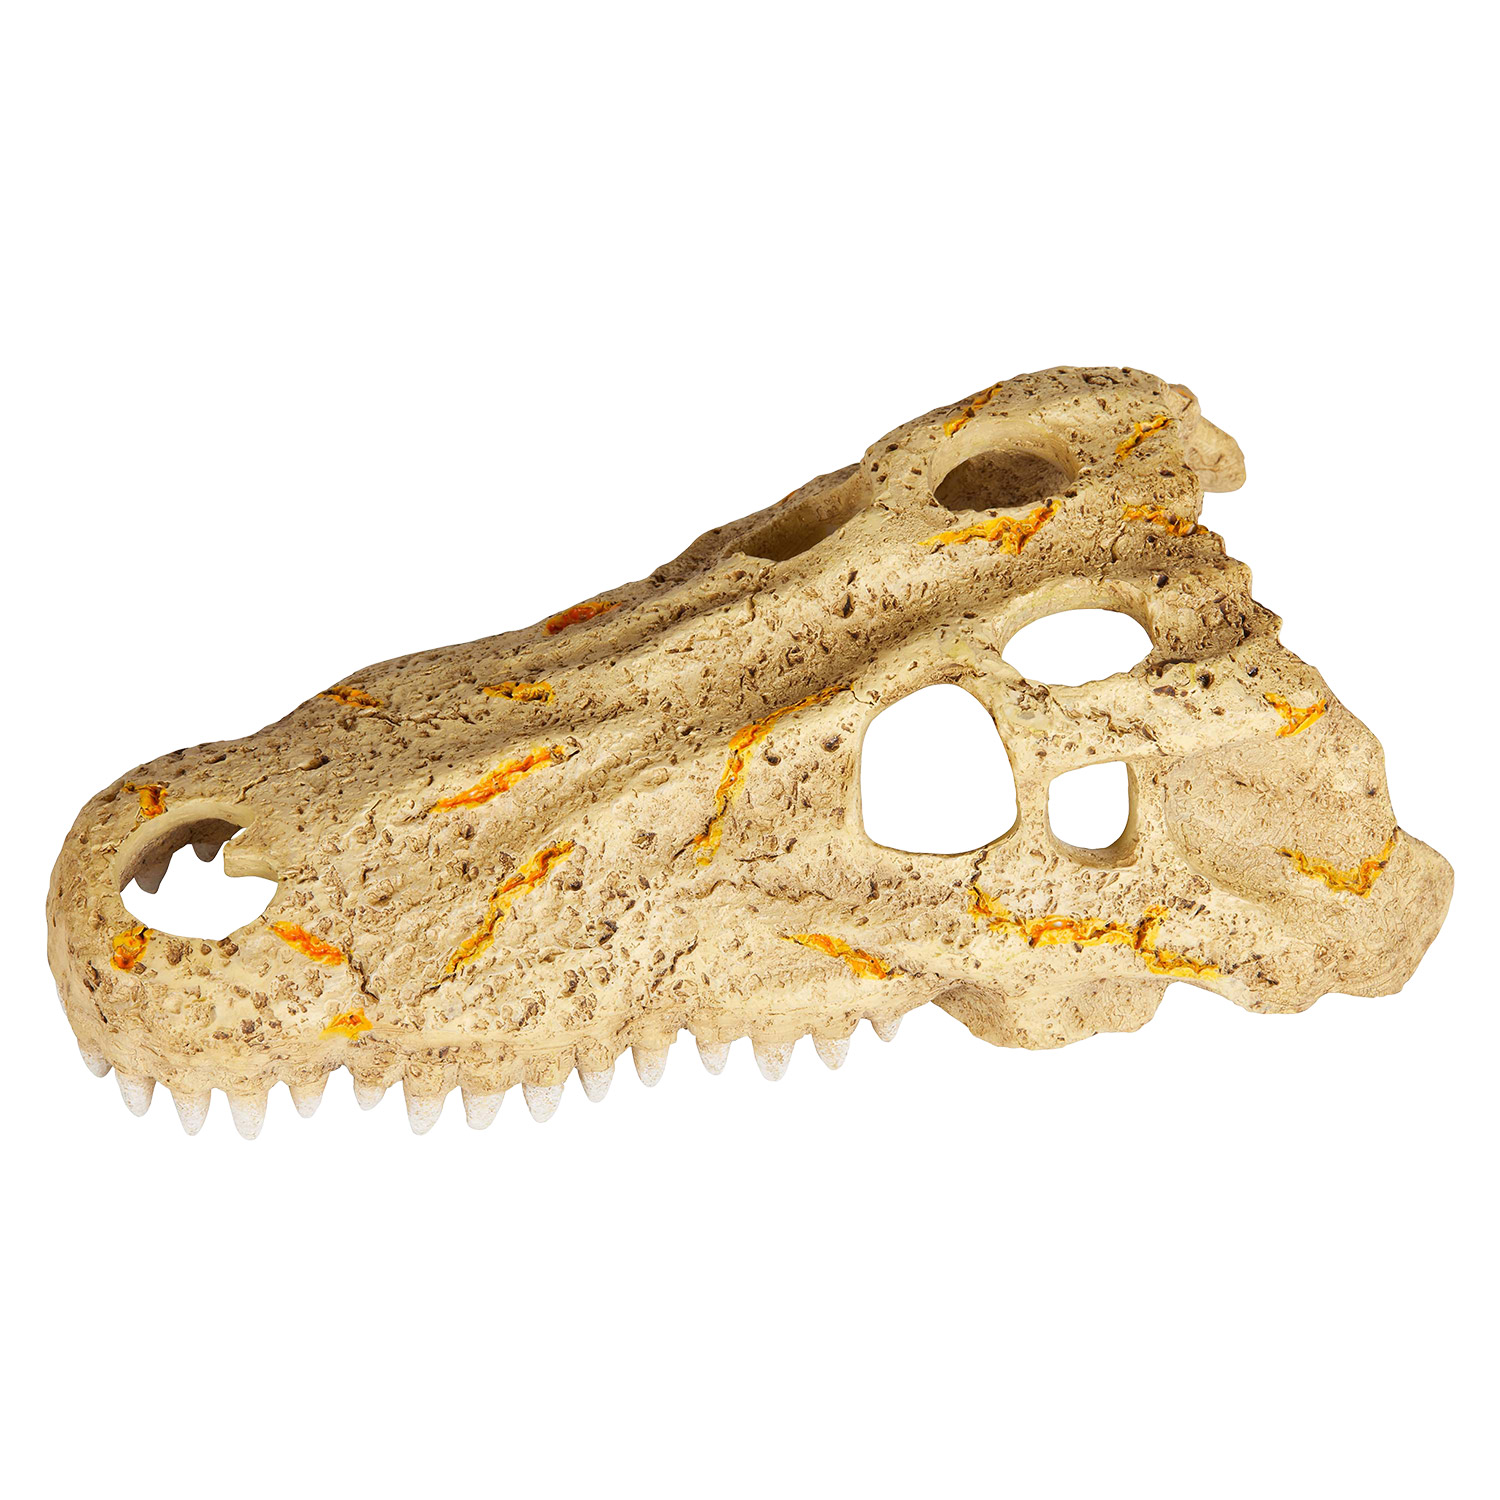 Zilla Rapid Sense Decor - Crocodile Skull - Medium